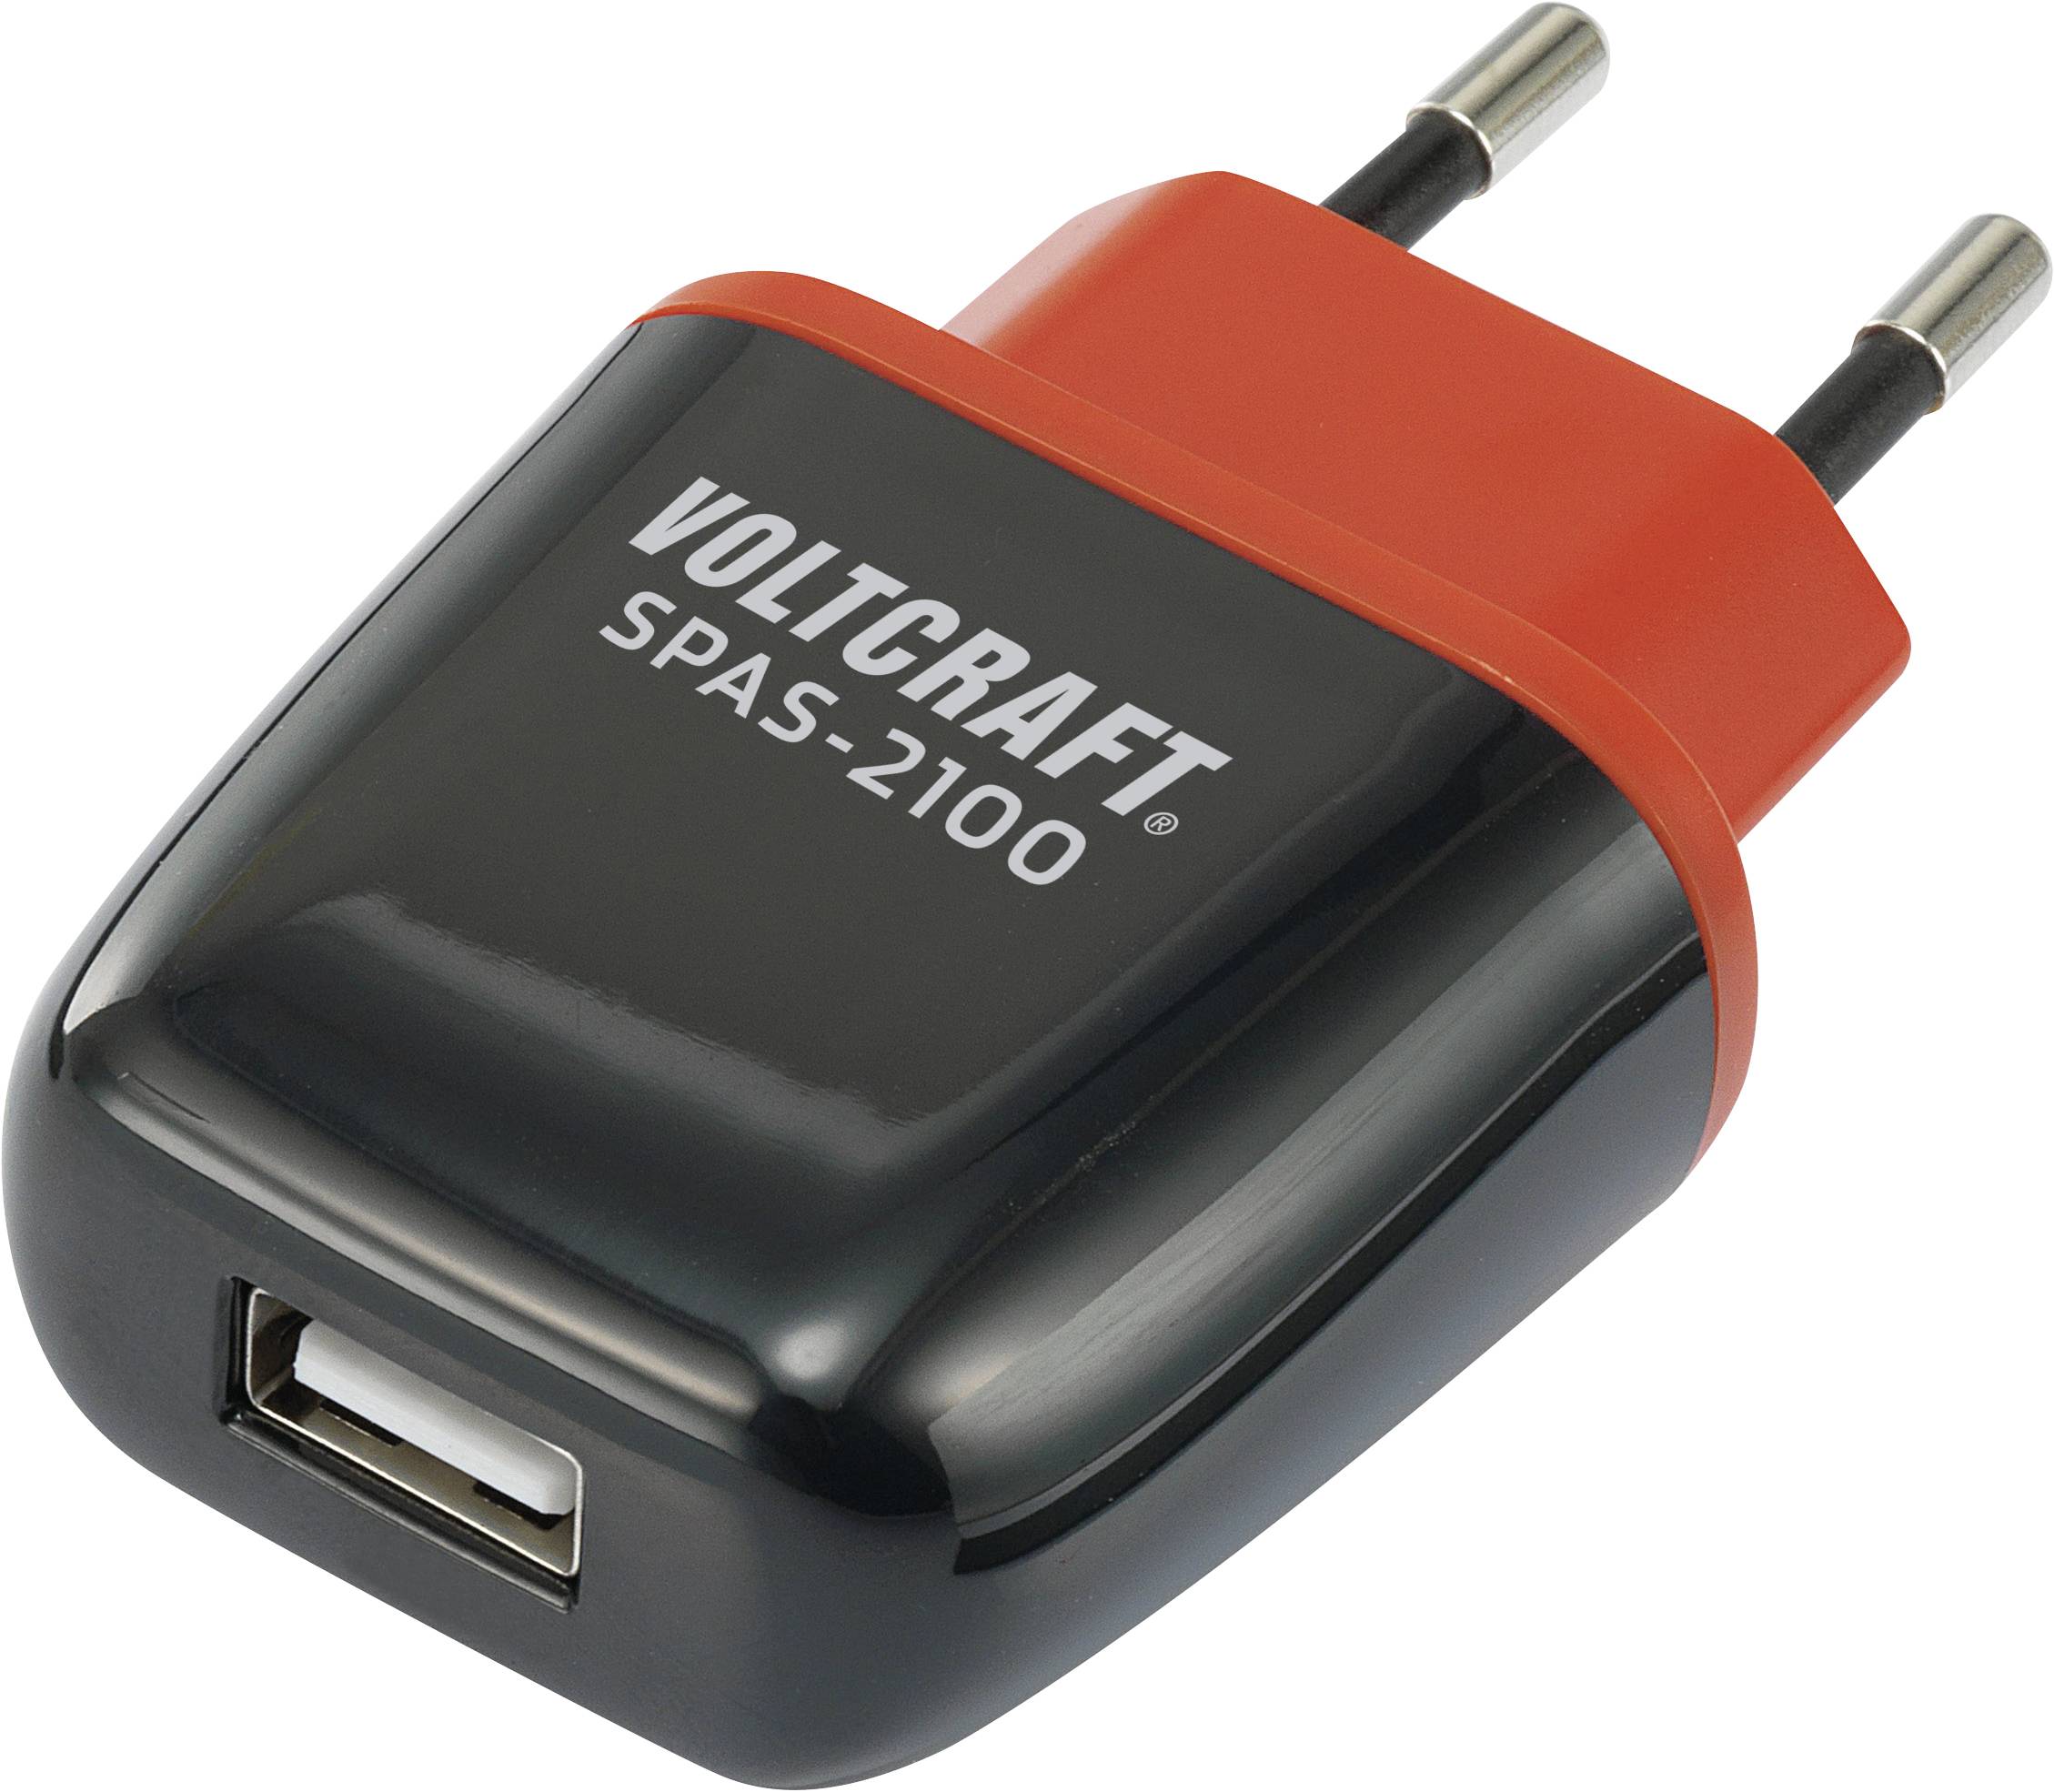 CONRAD VOLTCRAFT SPAS-2100 VC-11413285 USB-Ladegerät Steckdose Ausgangsstrom (max.) 2100 mA 1 x USB